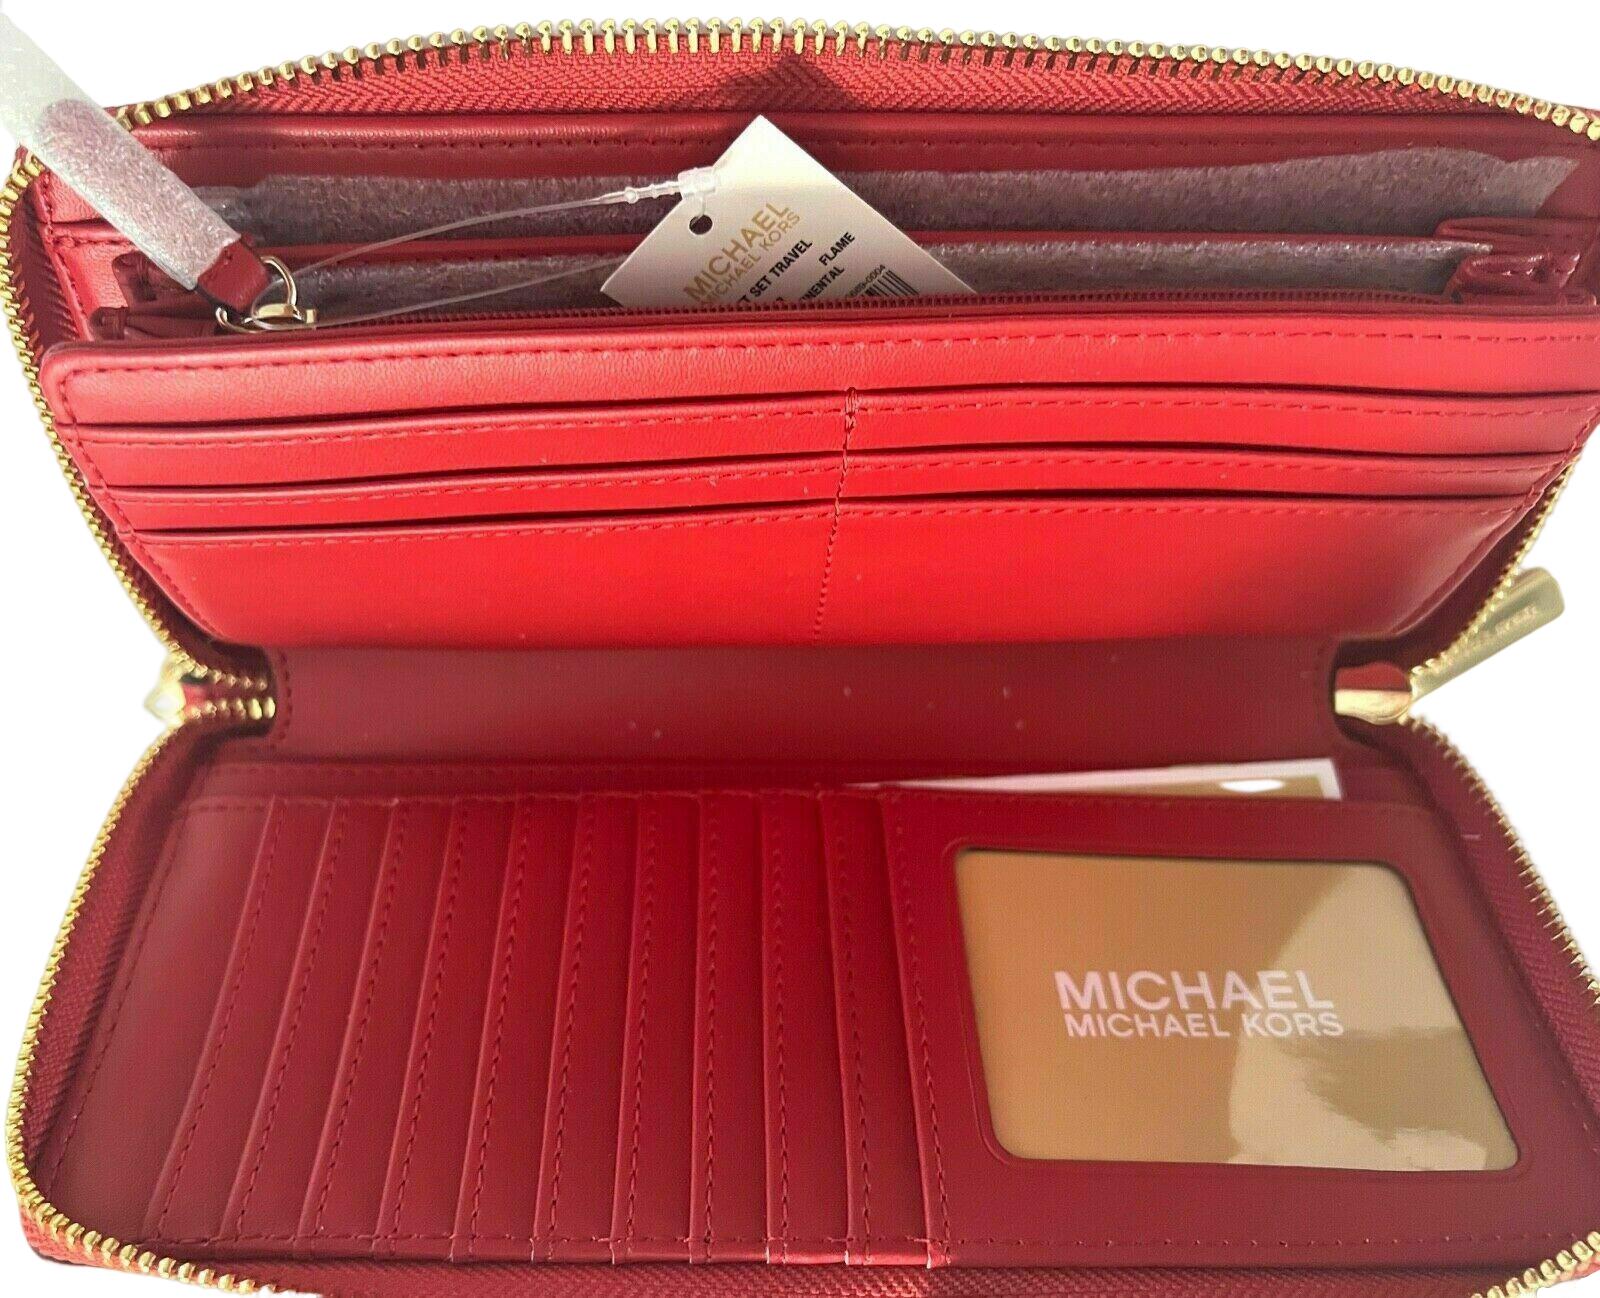 Michael Kors Jet Set Large Continental Travel Clutch Wristlet Wallet